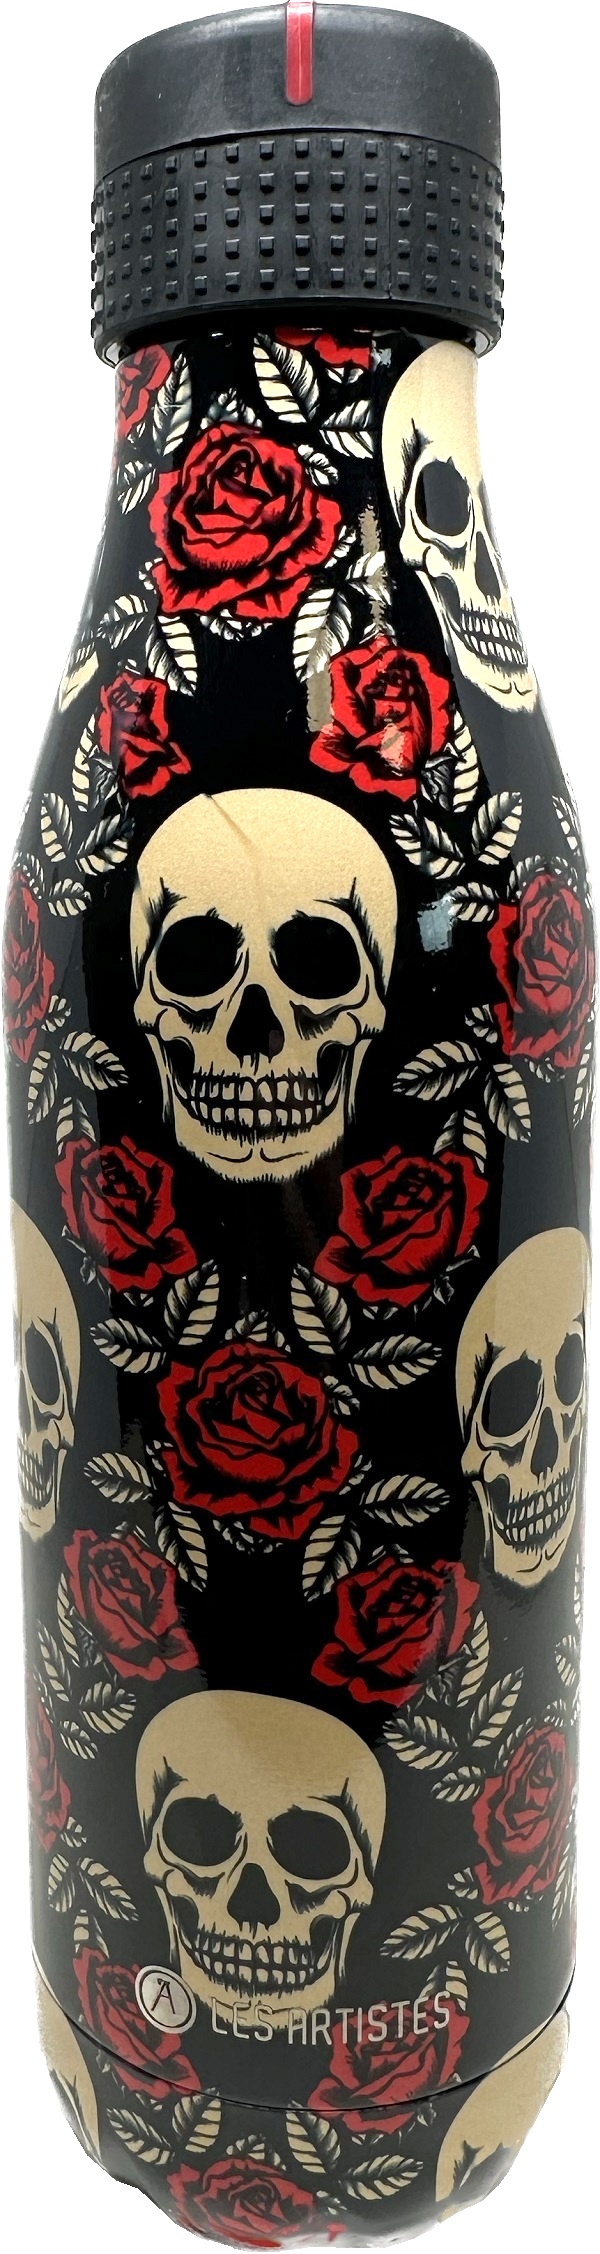 Termos: Rose and Skull. Mat